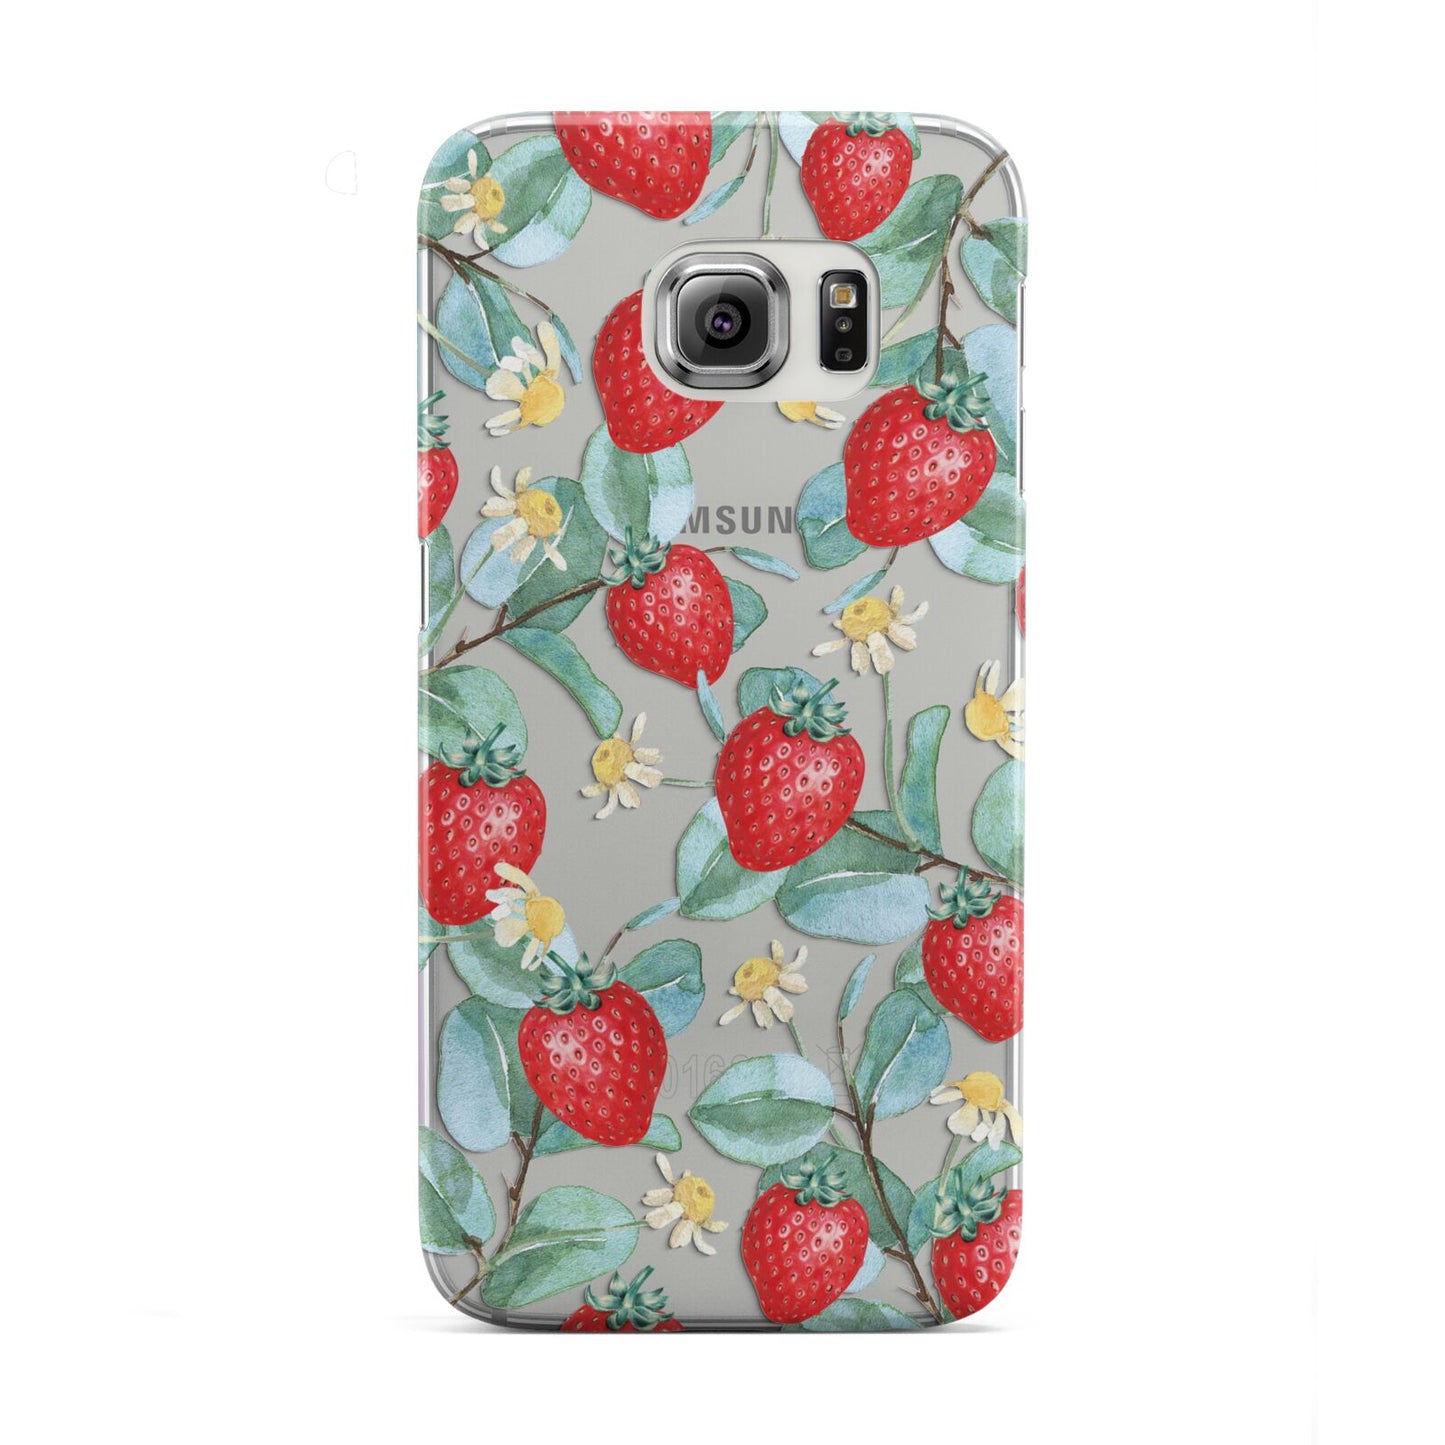 Strawberry Plant Samsung Galaxy S6 Edge Case